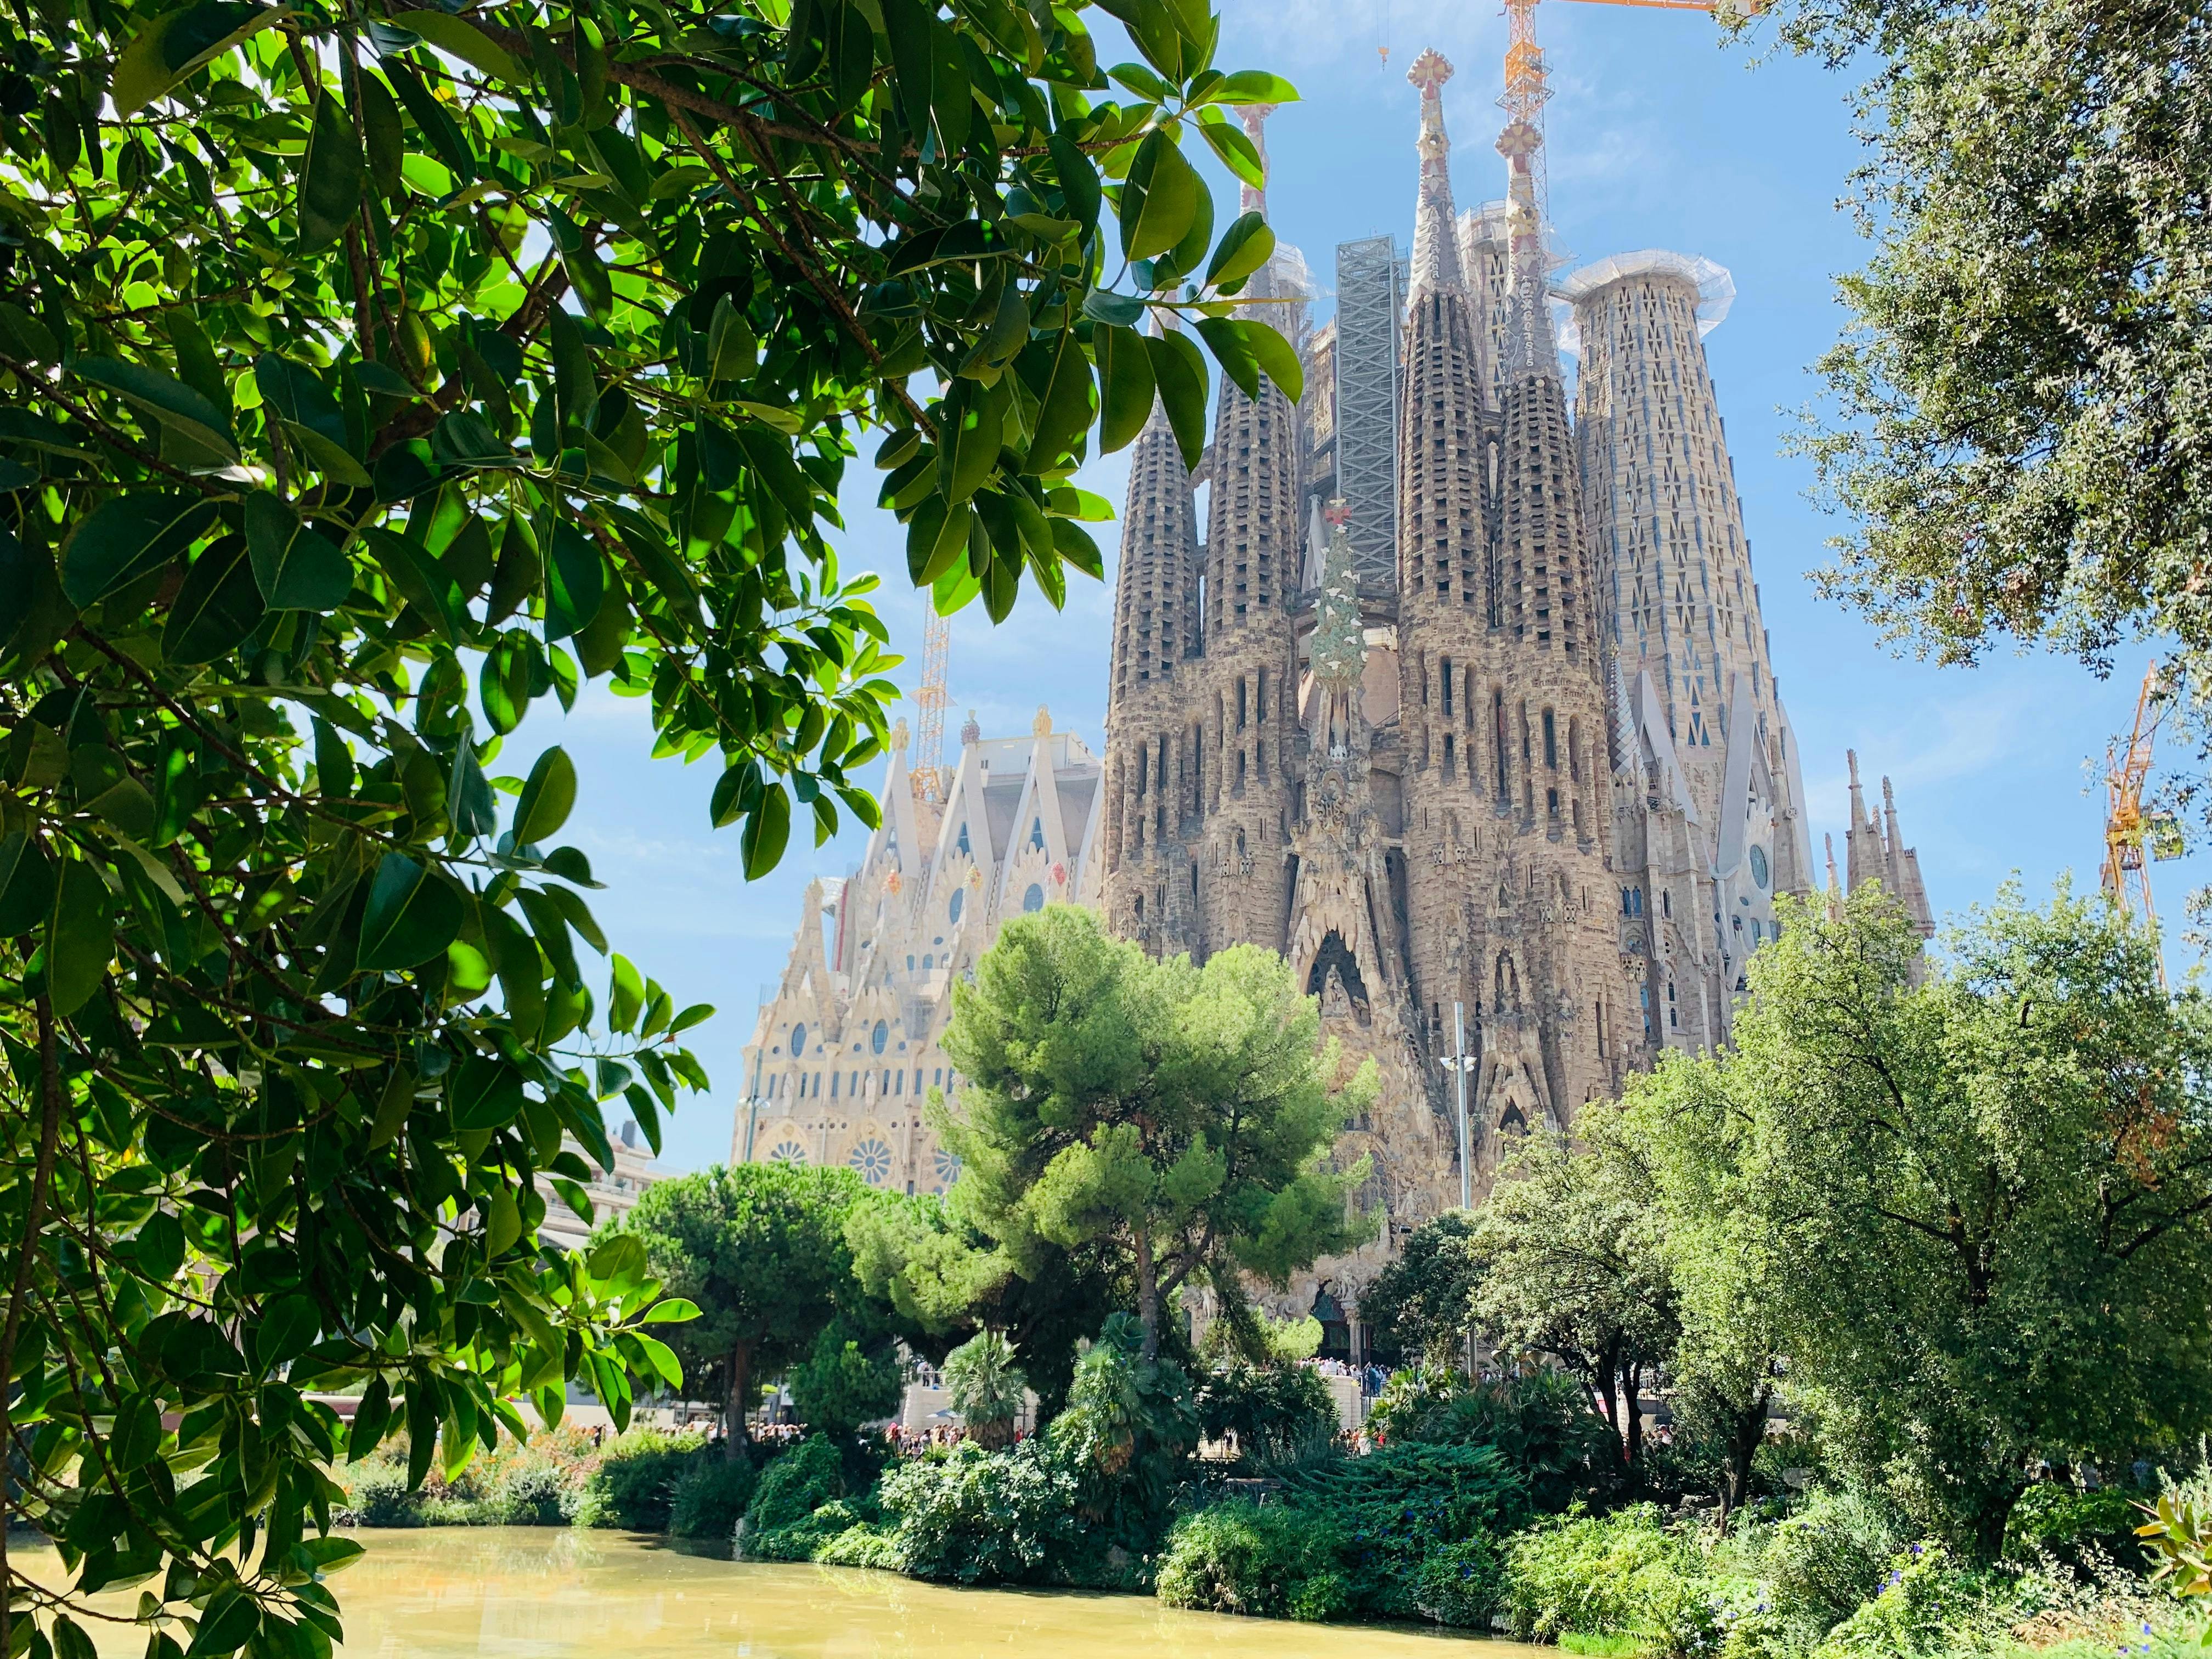 Gaudí's Barcelona masterpieces exploration game and tour